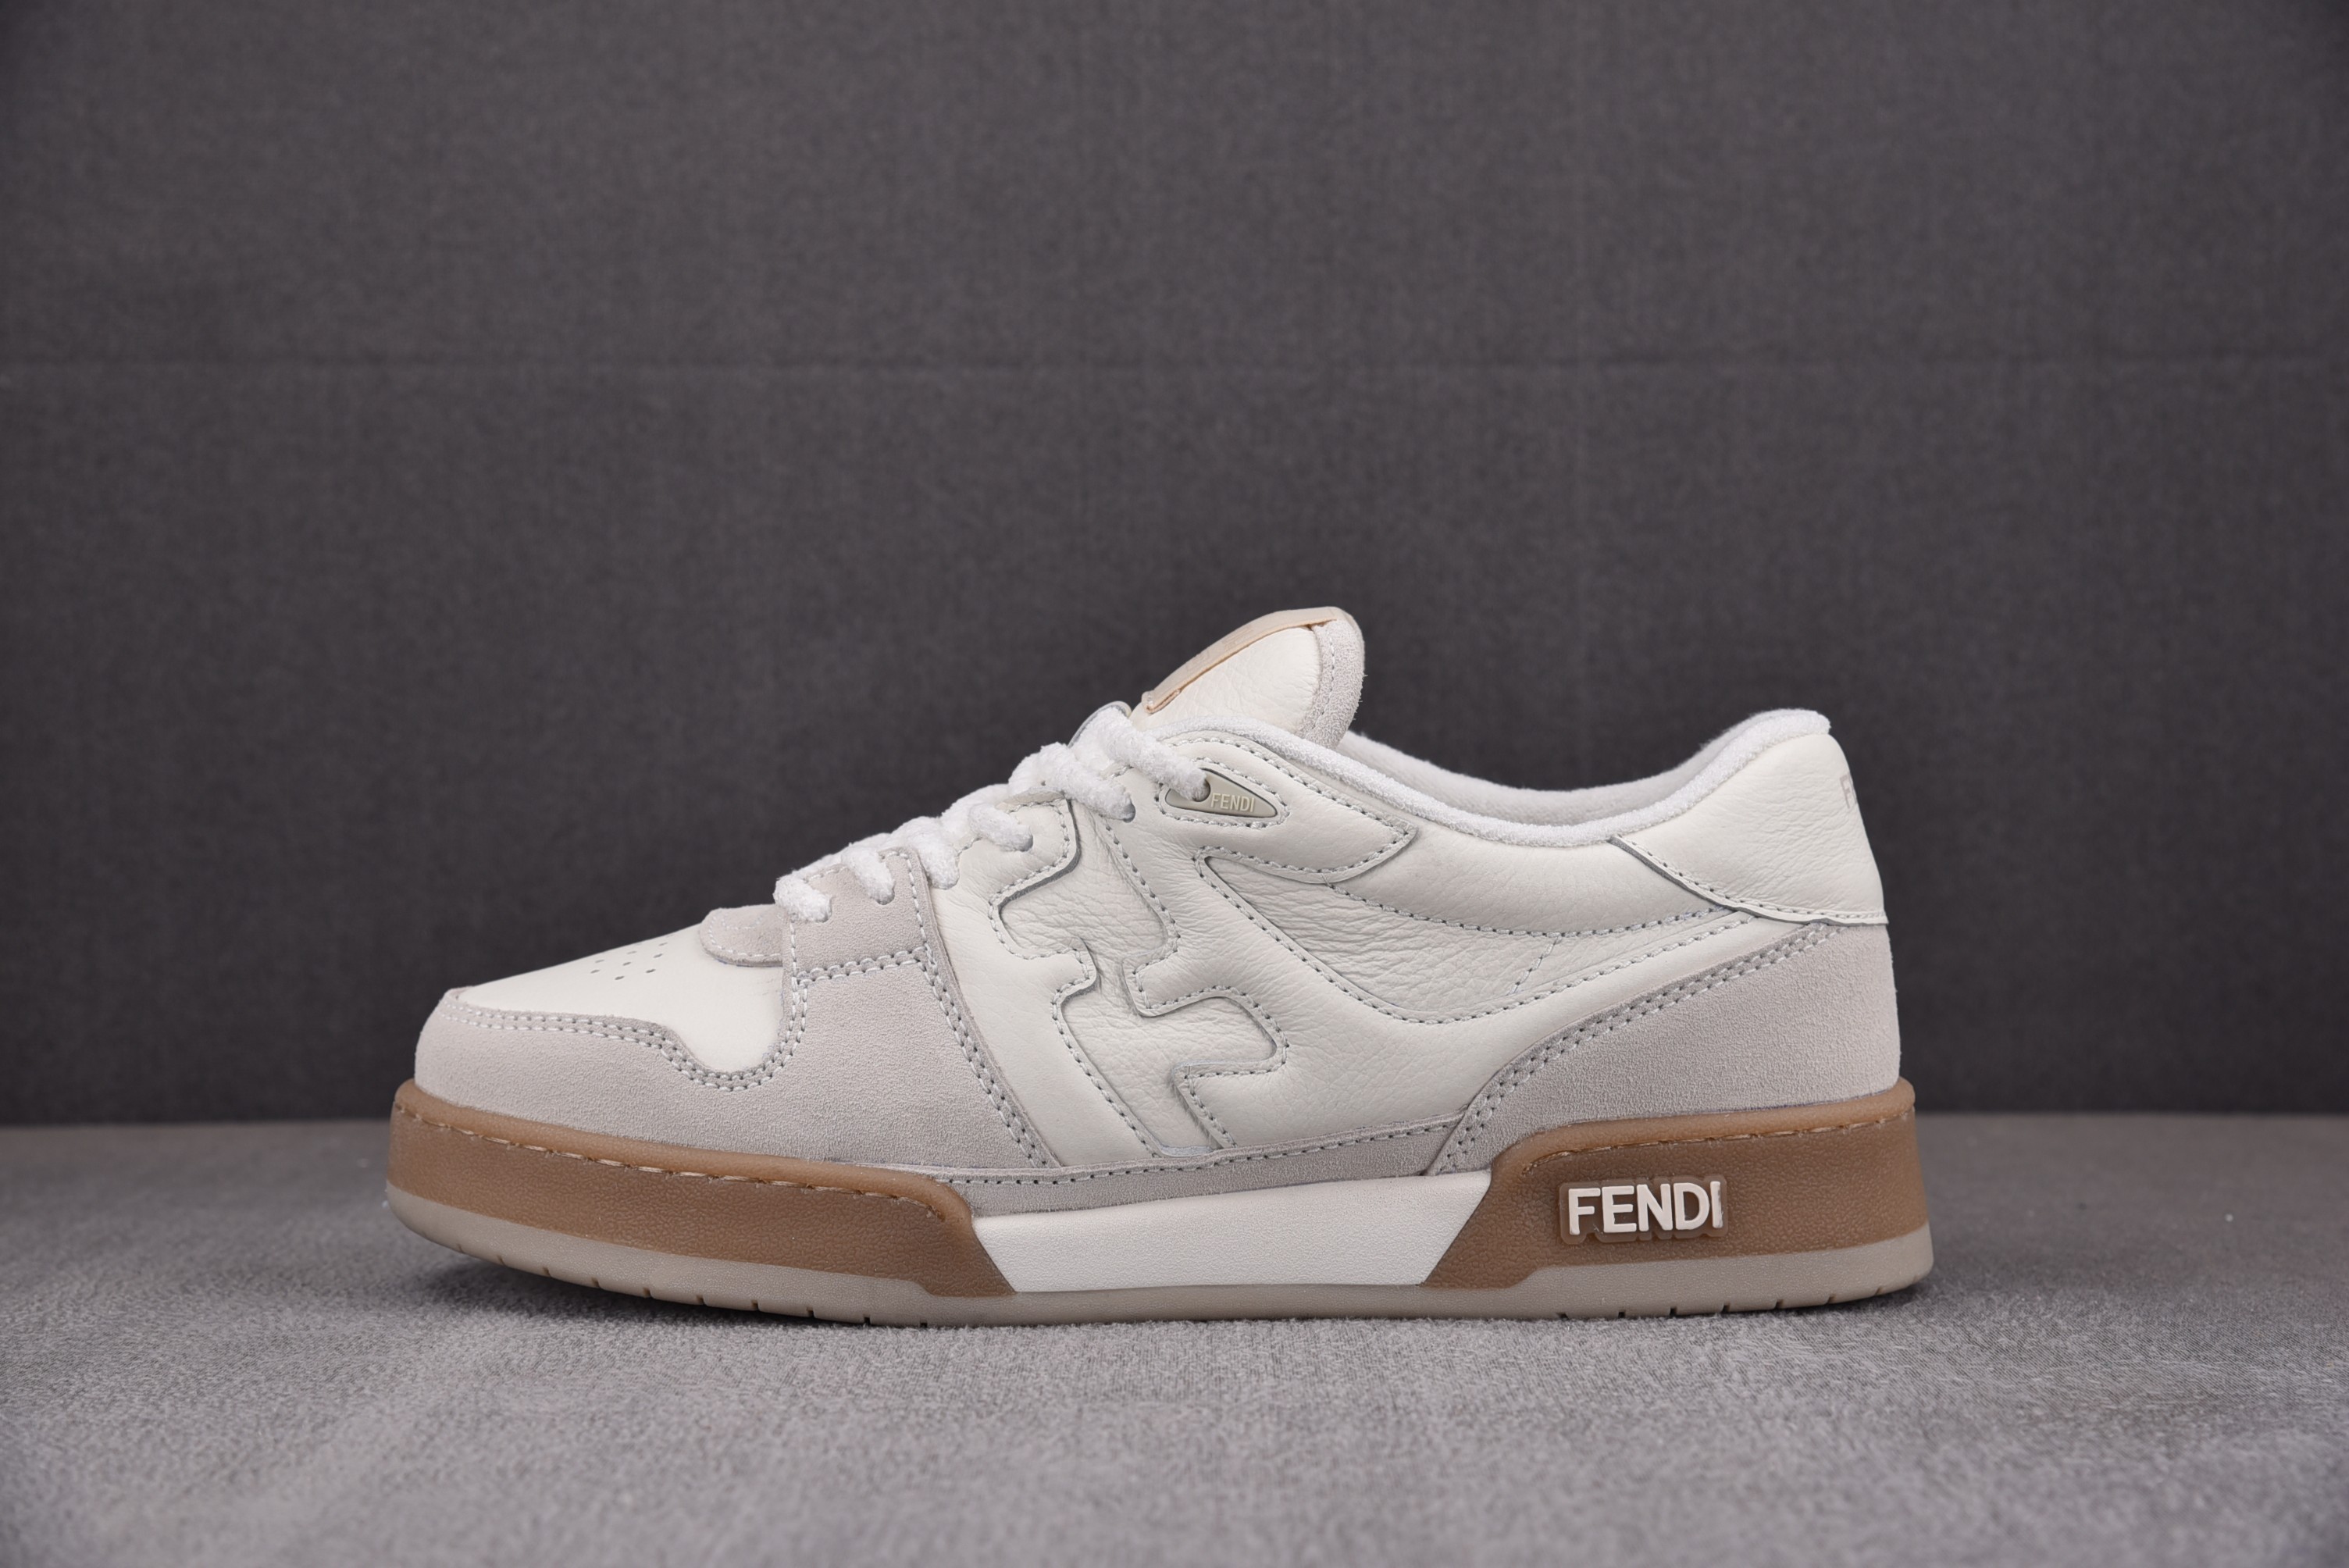 【BQ】FENDI Match 芬迪板鞋 白色